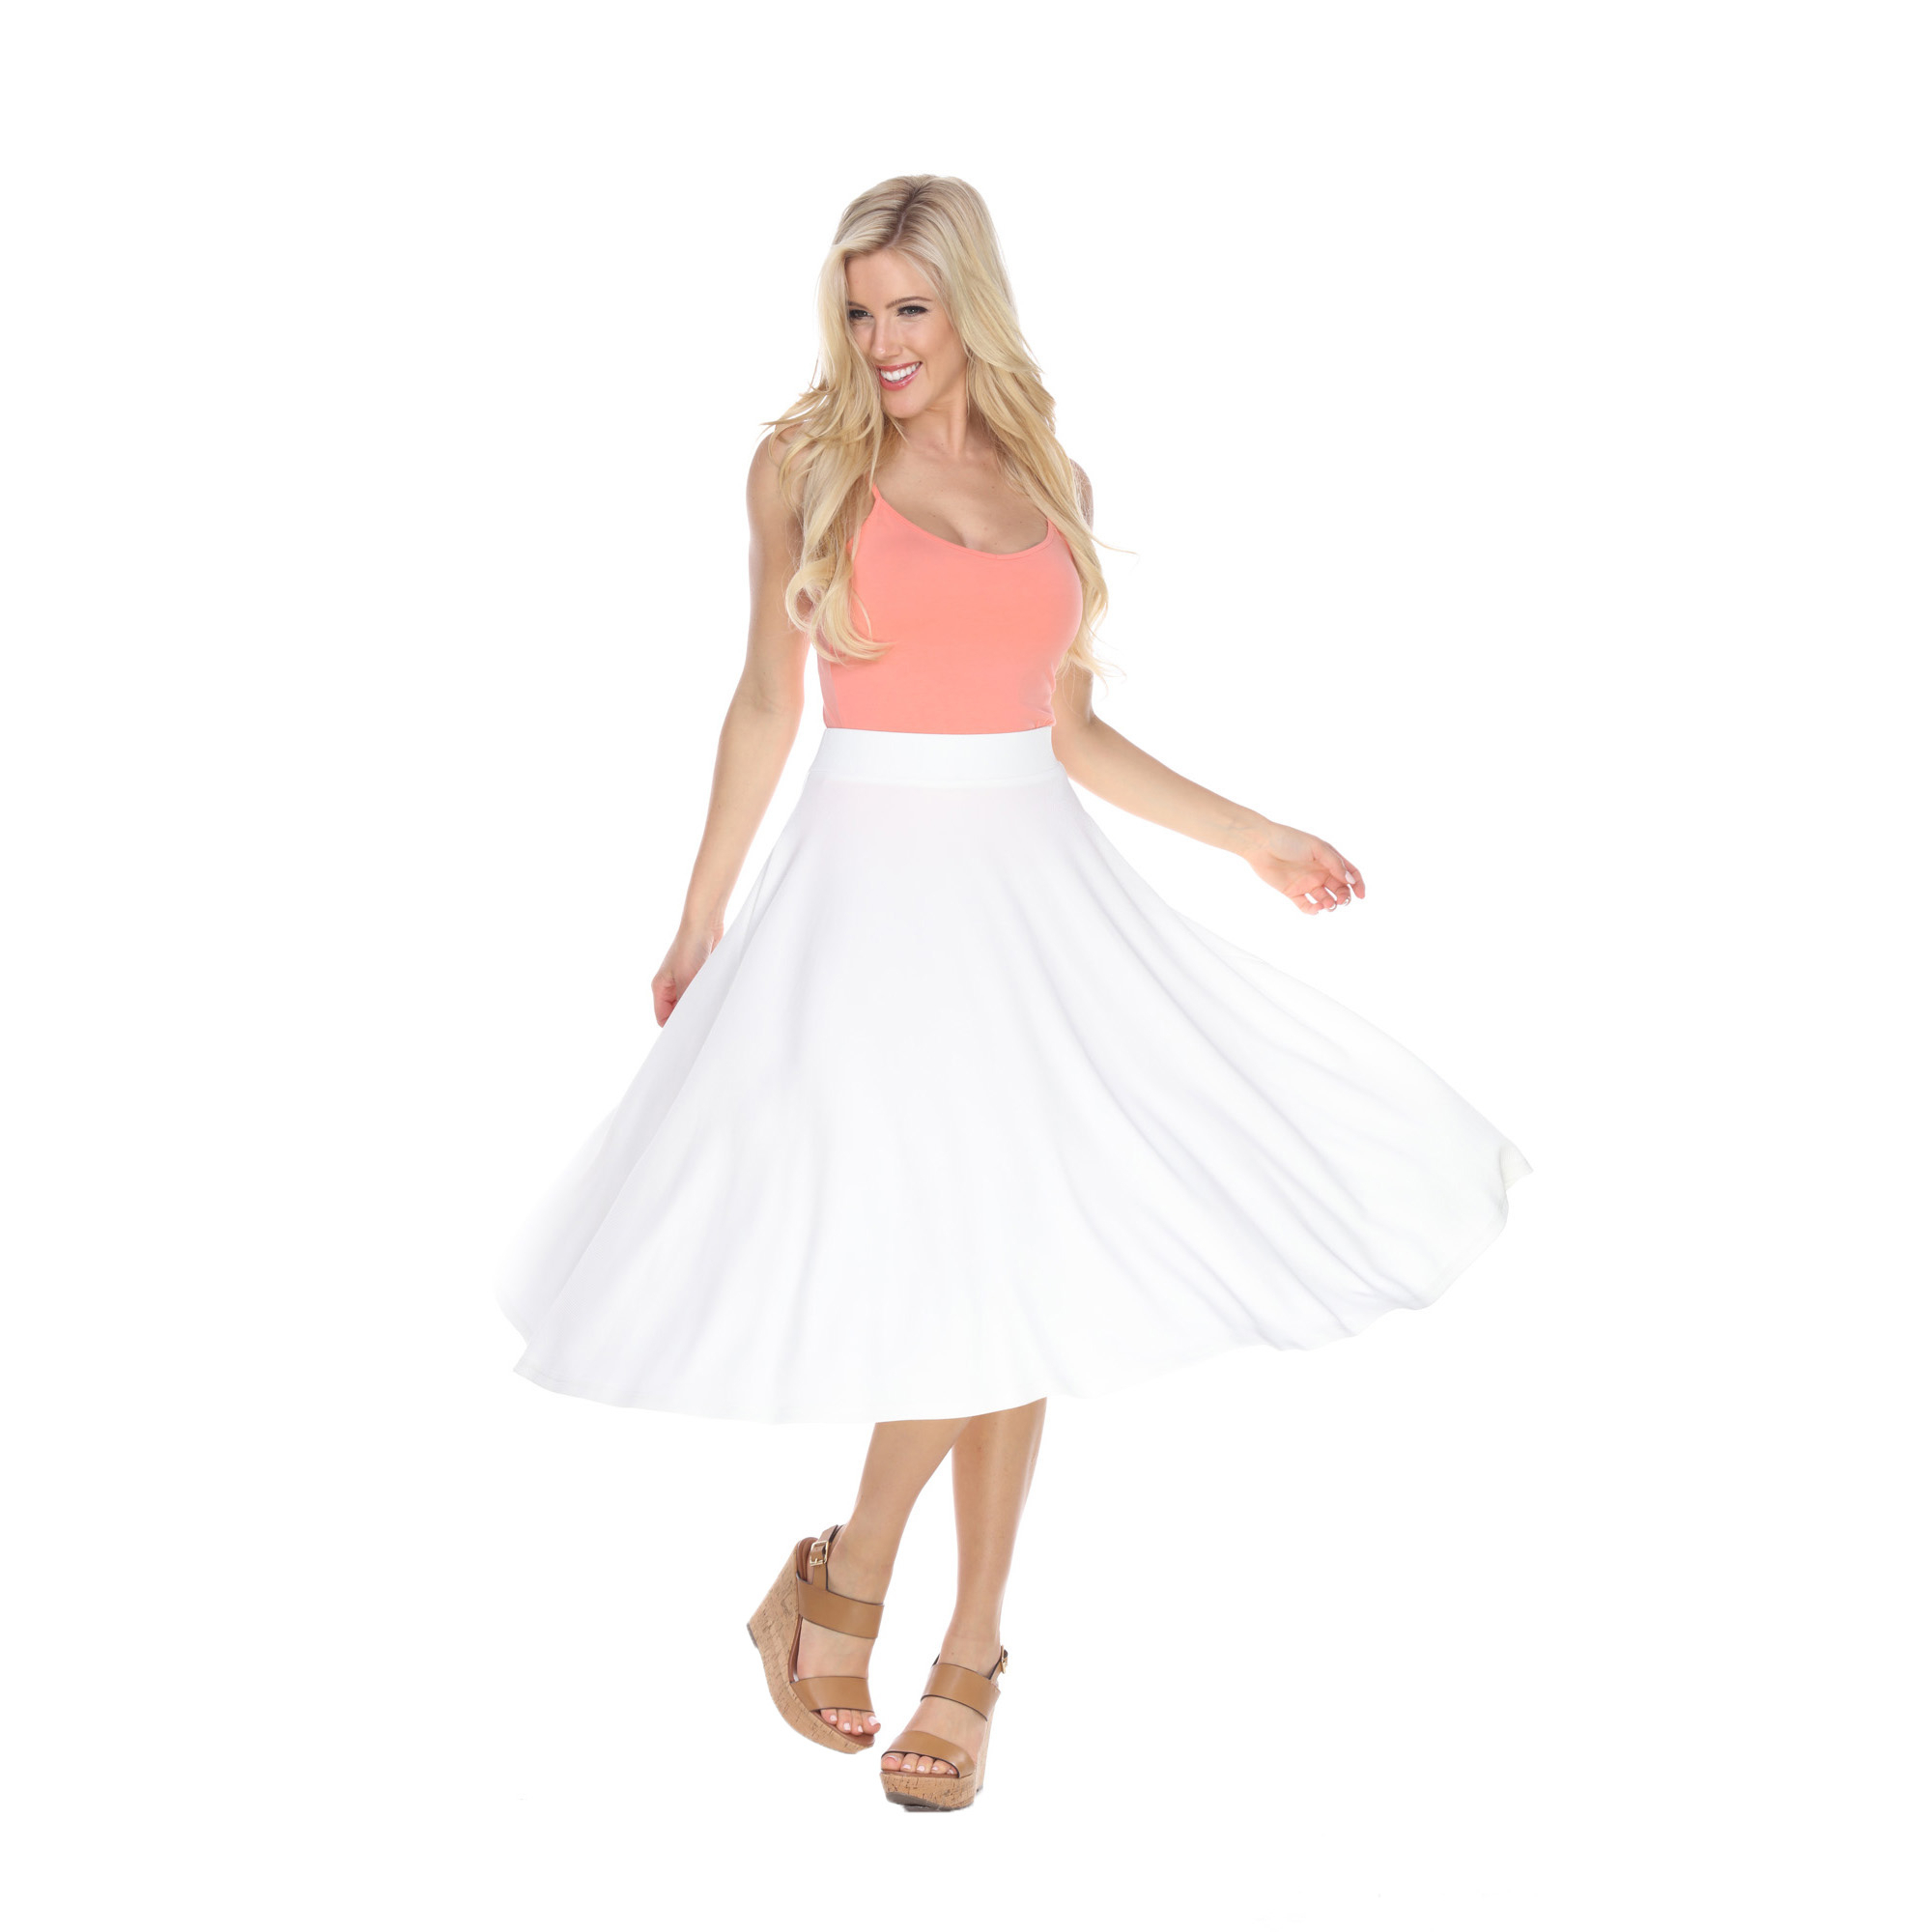 White Mark Womenâs Flared Midi Skirt With Pockets - Olive, 3X